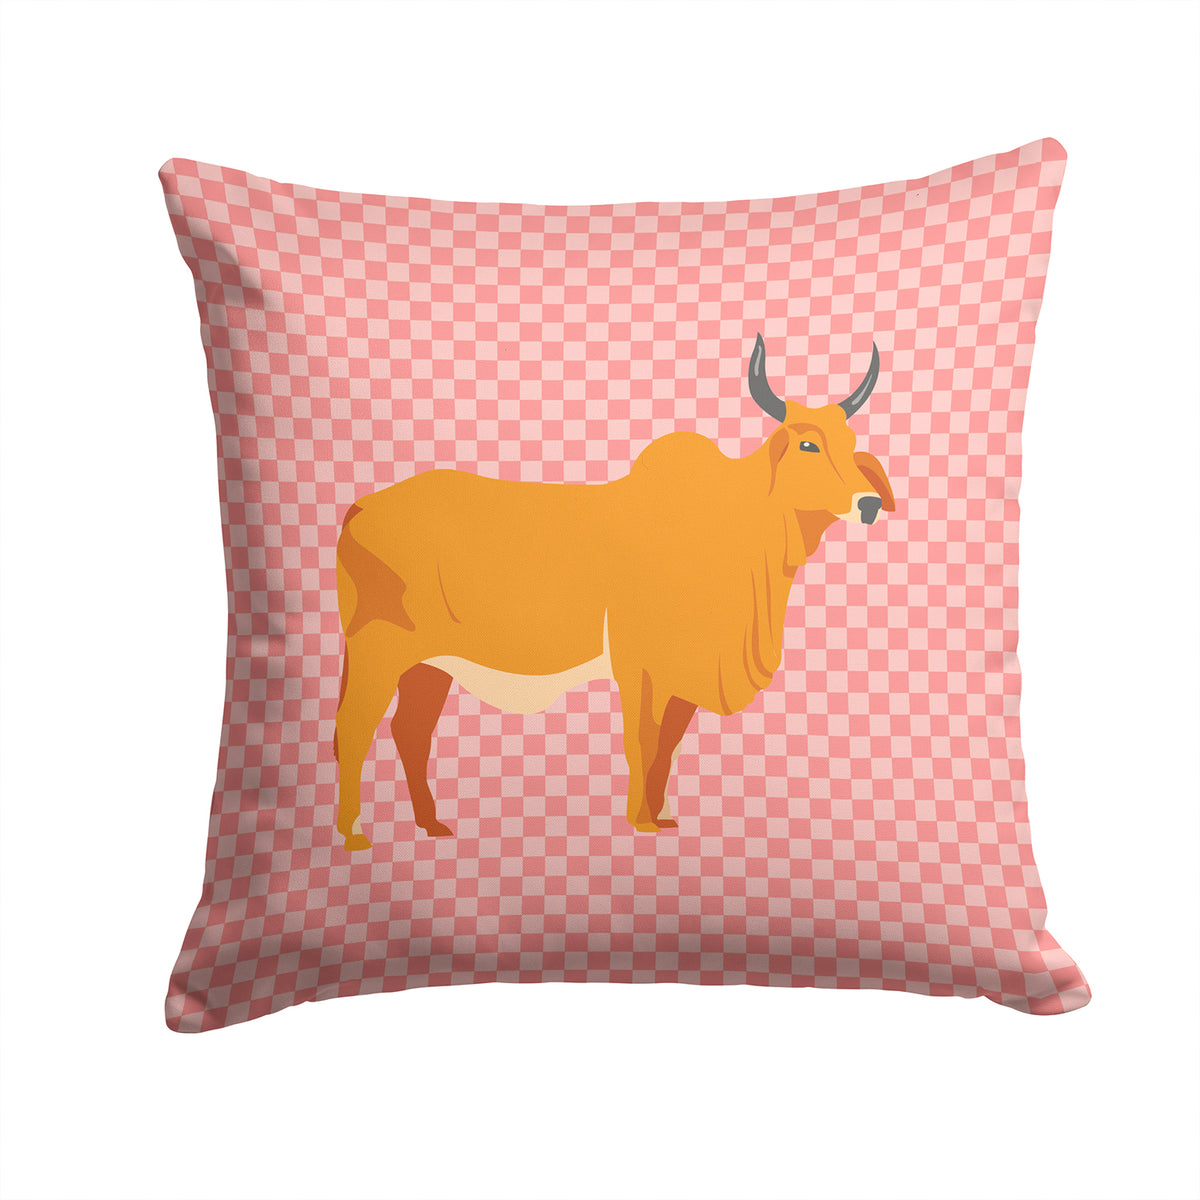 Zebu Indicine Cow Pink Check Fabric Decorative Pillow BB7825PW1414 - the-store.com